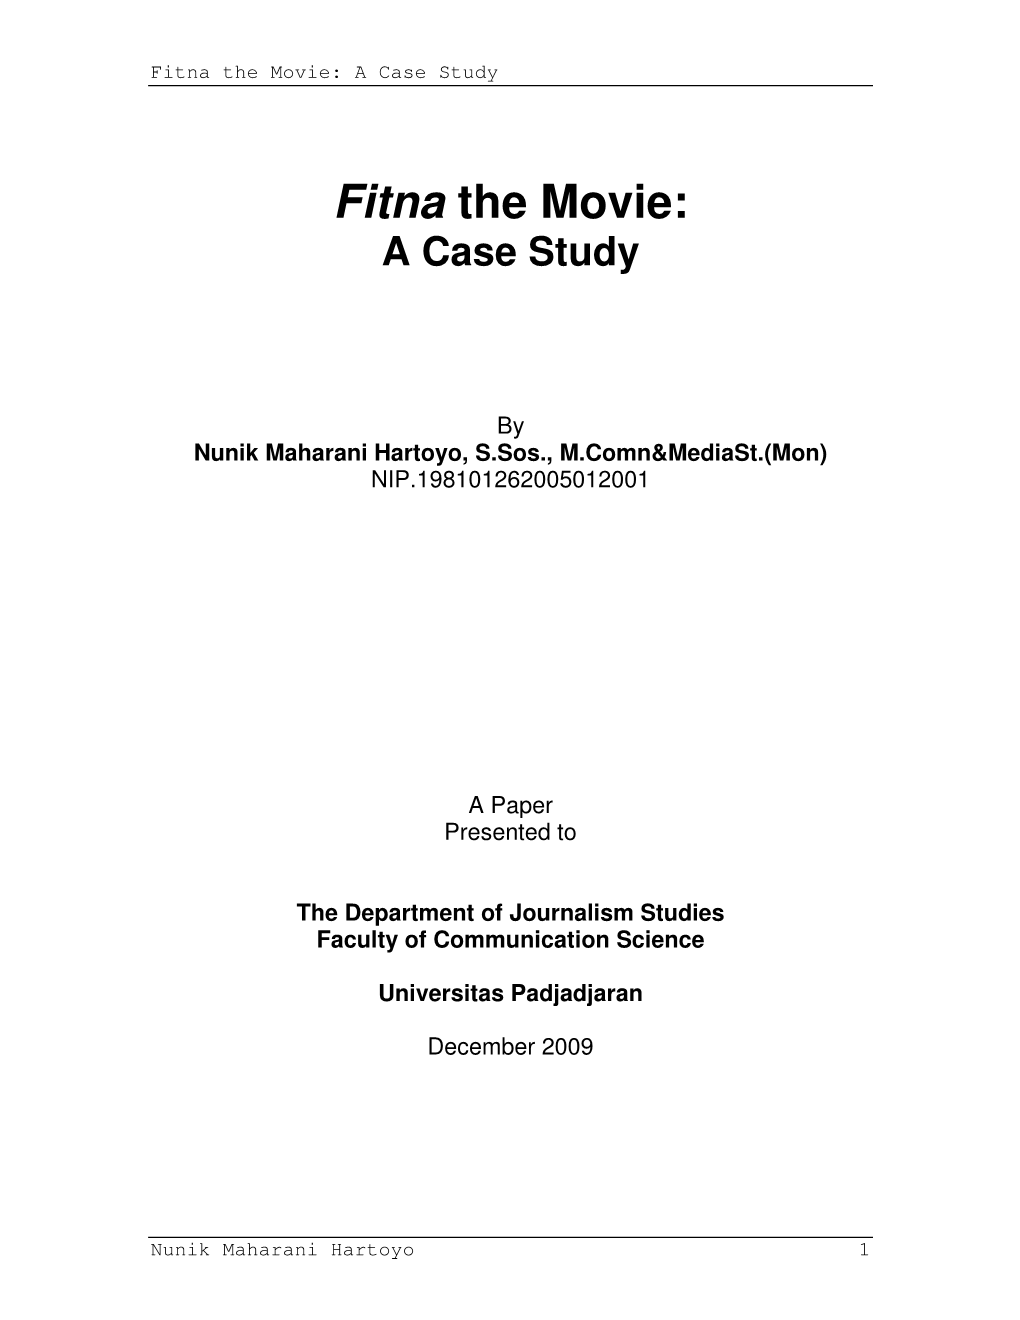 Fitna the Movie: a Case Study